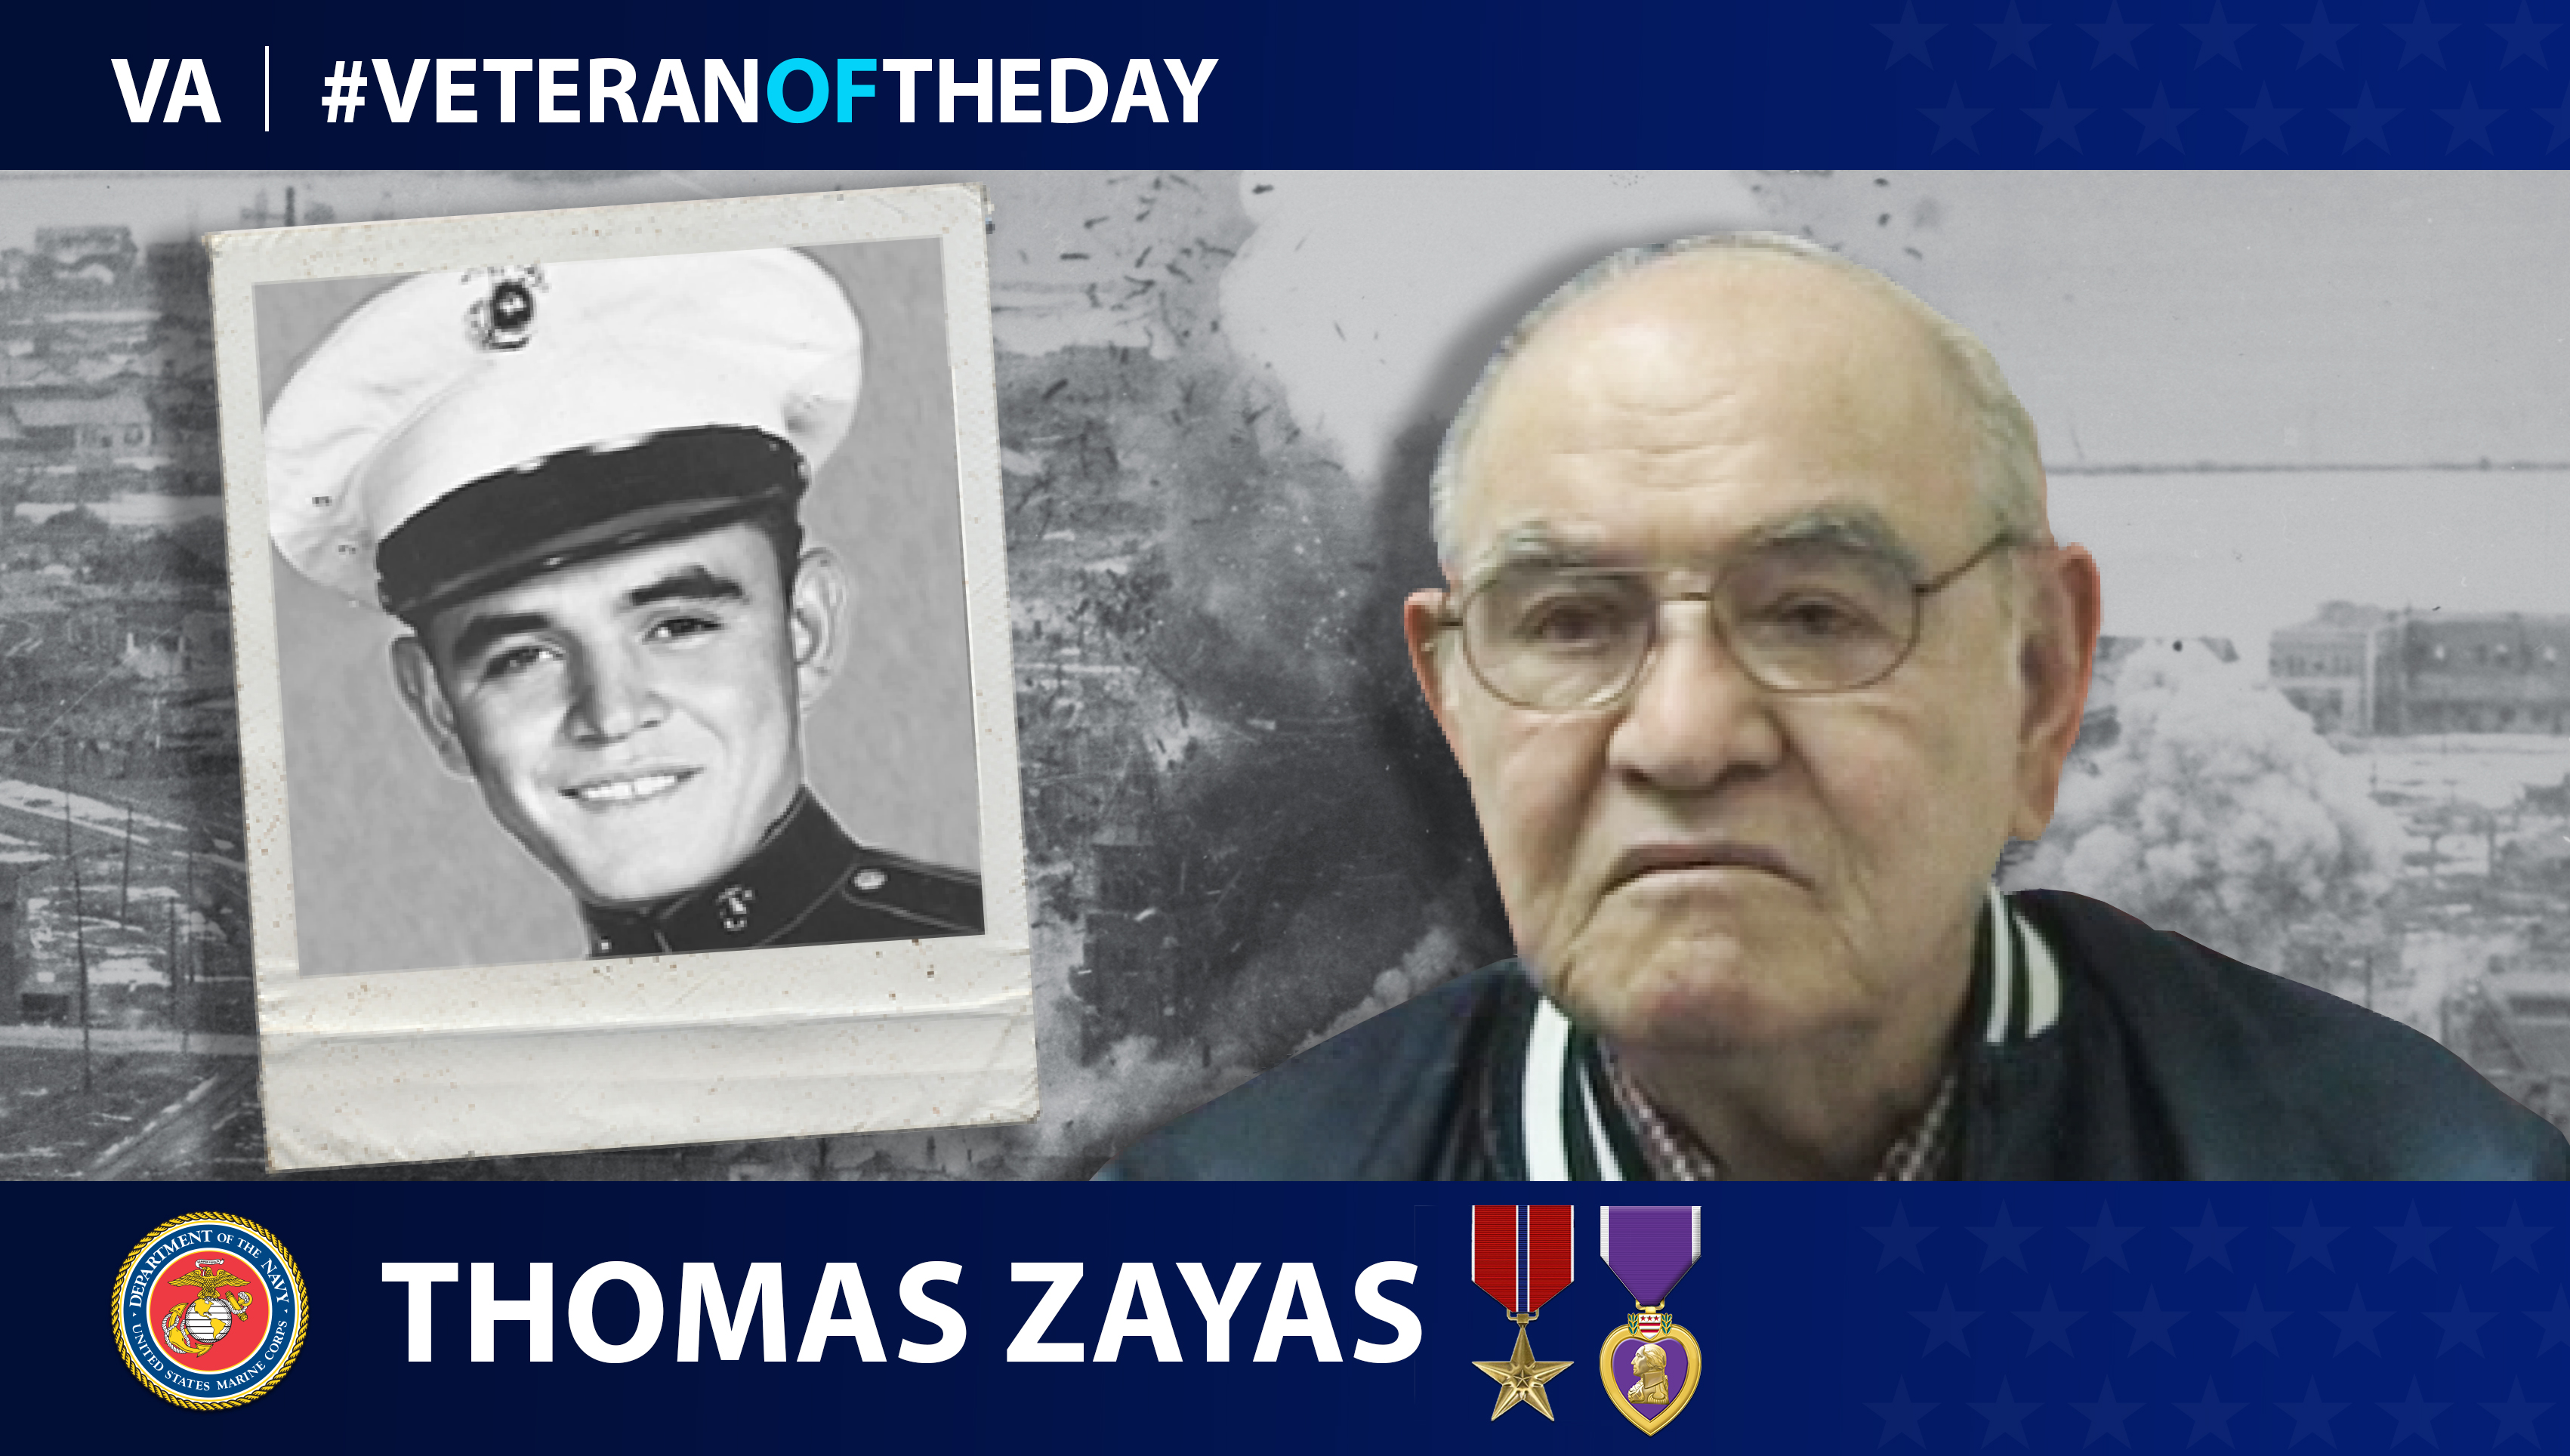 Marine Corps Veteran Thomas Zayas is today's Veteran of the Day.